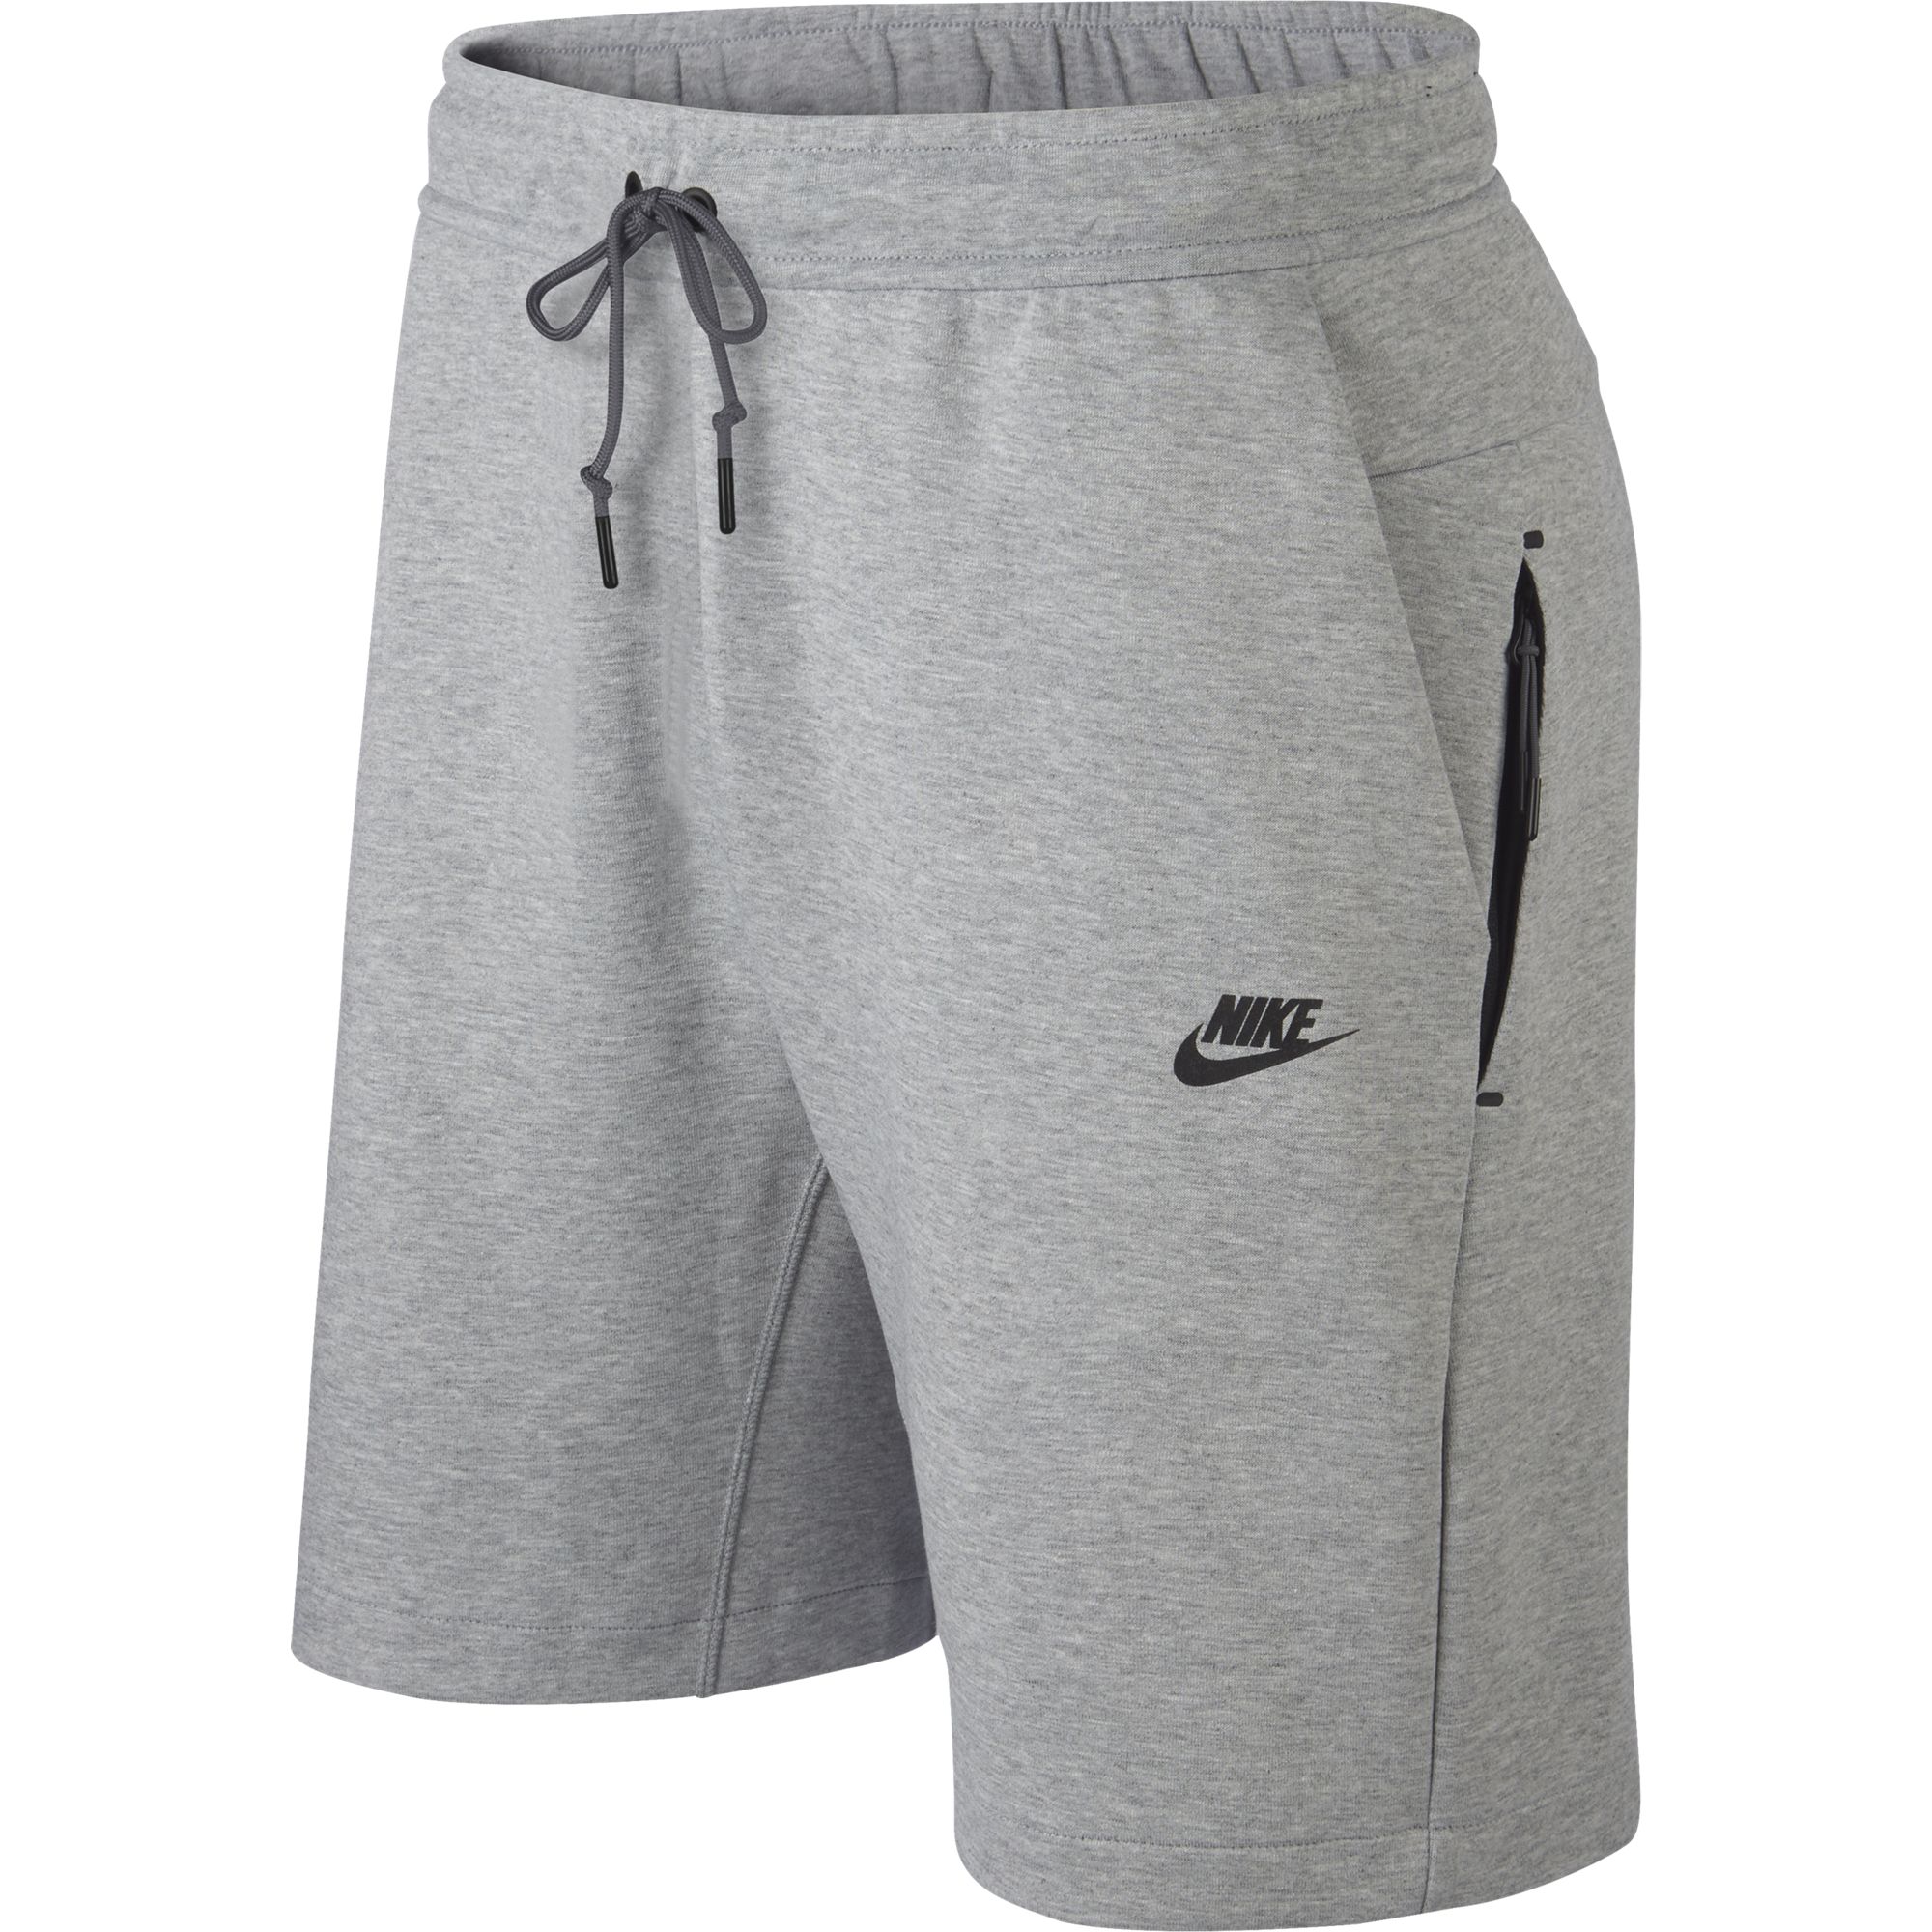 Шорты Nike Sportswear Tech Fleece - картинка